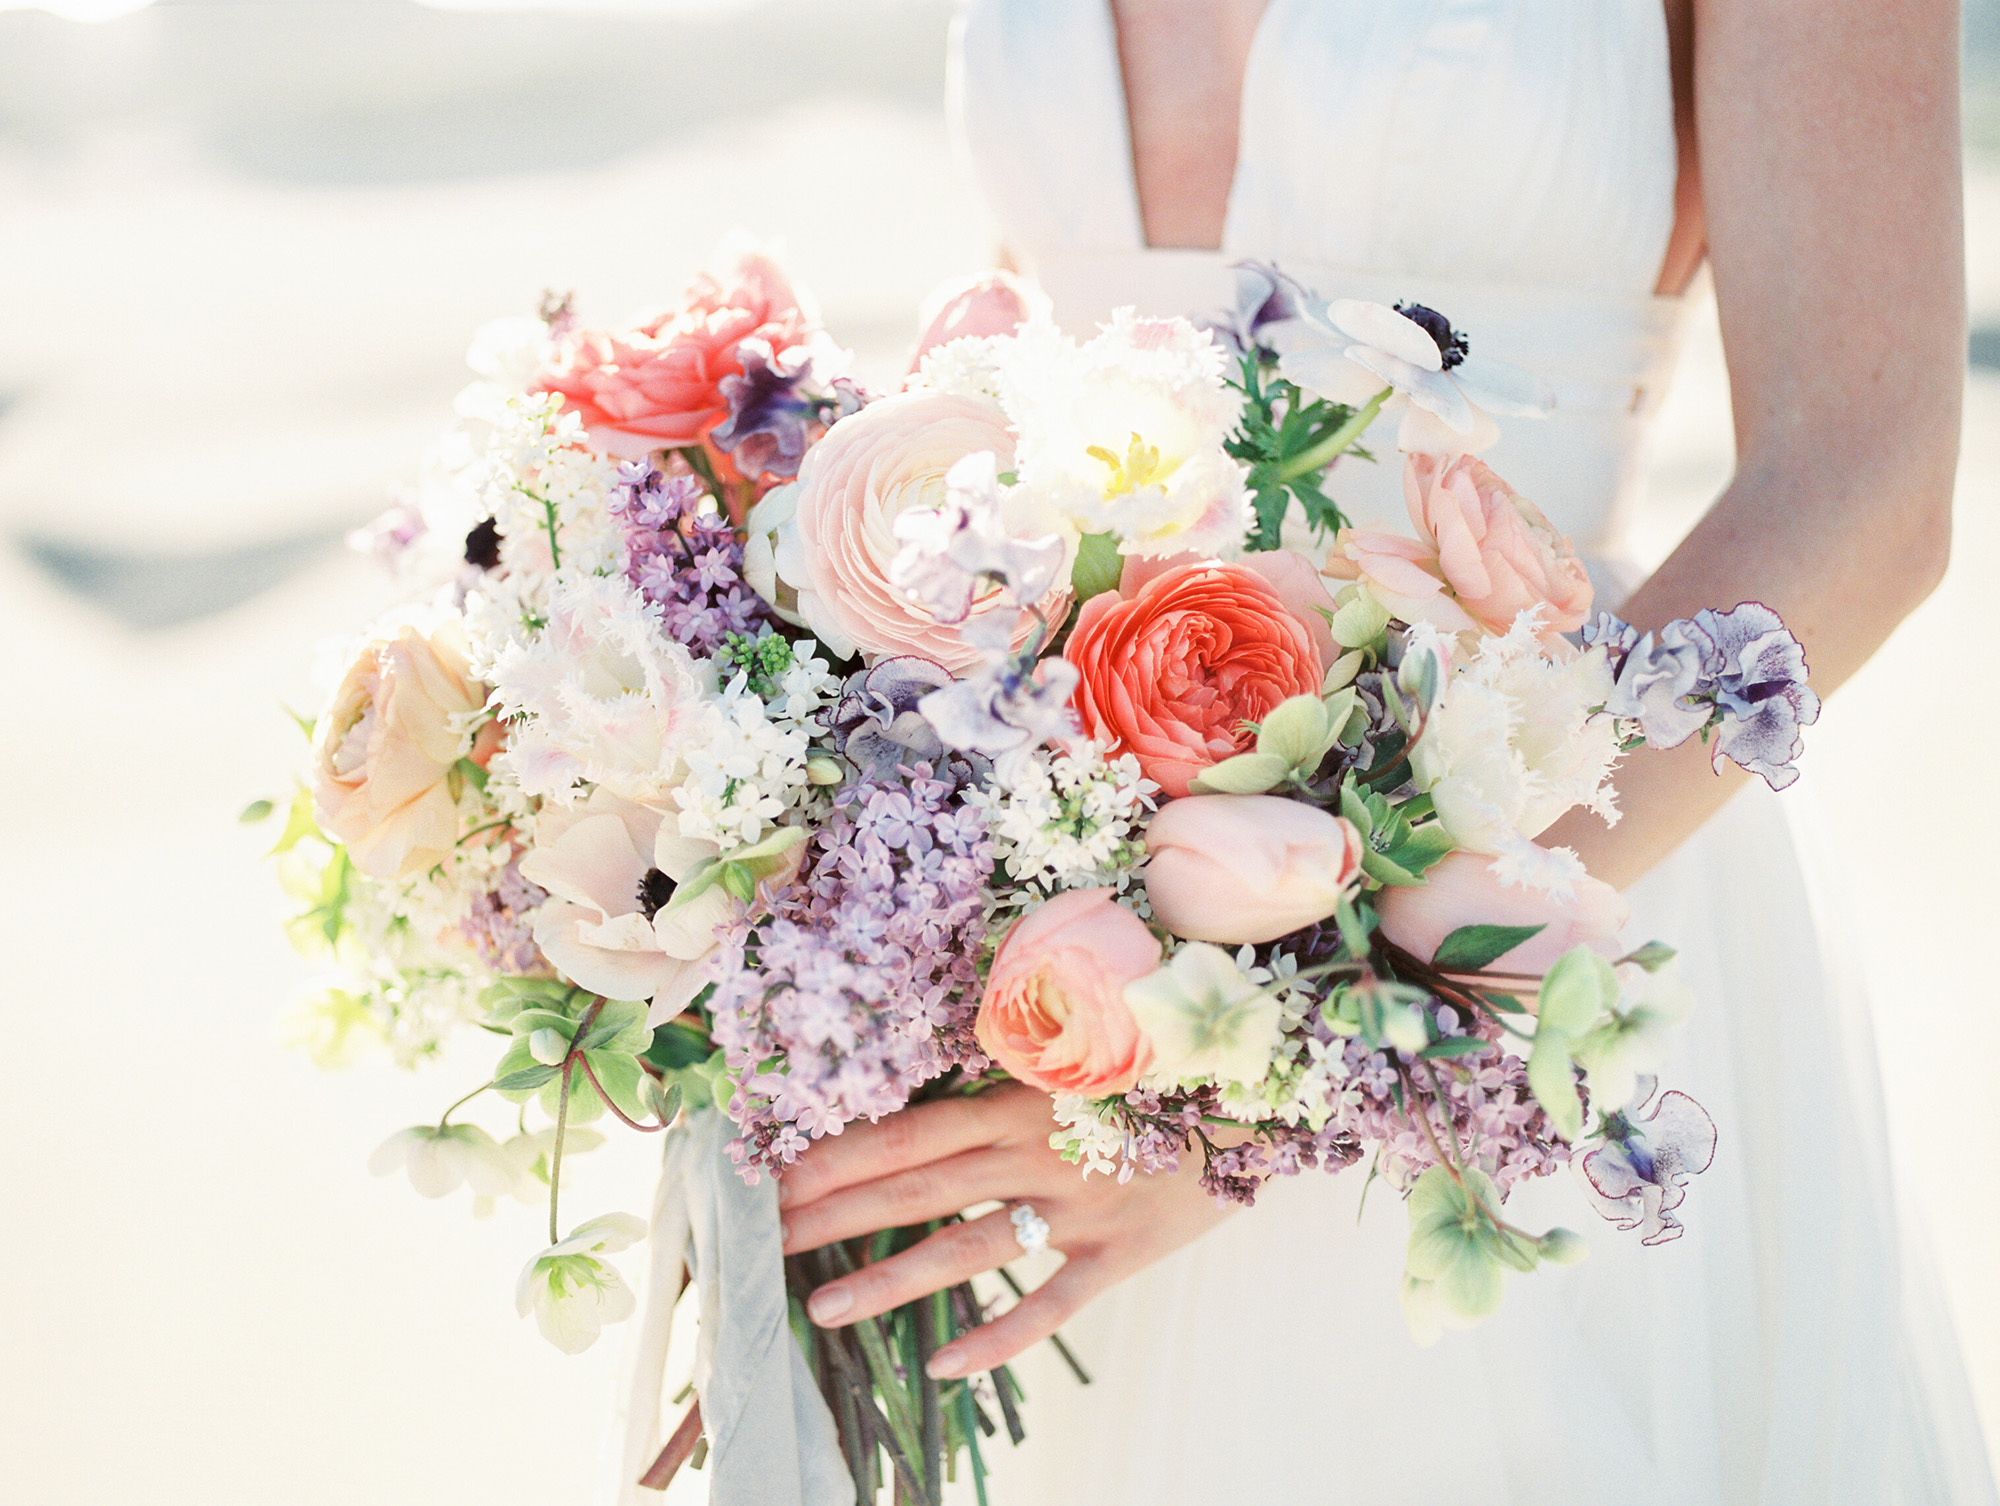 Santa Barbara wedding photographer Tenth & Grace captures elopements and intimate weddings throughout Santa Barbara.